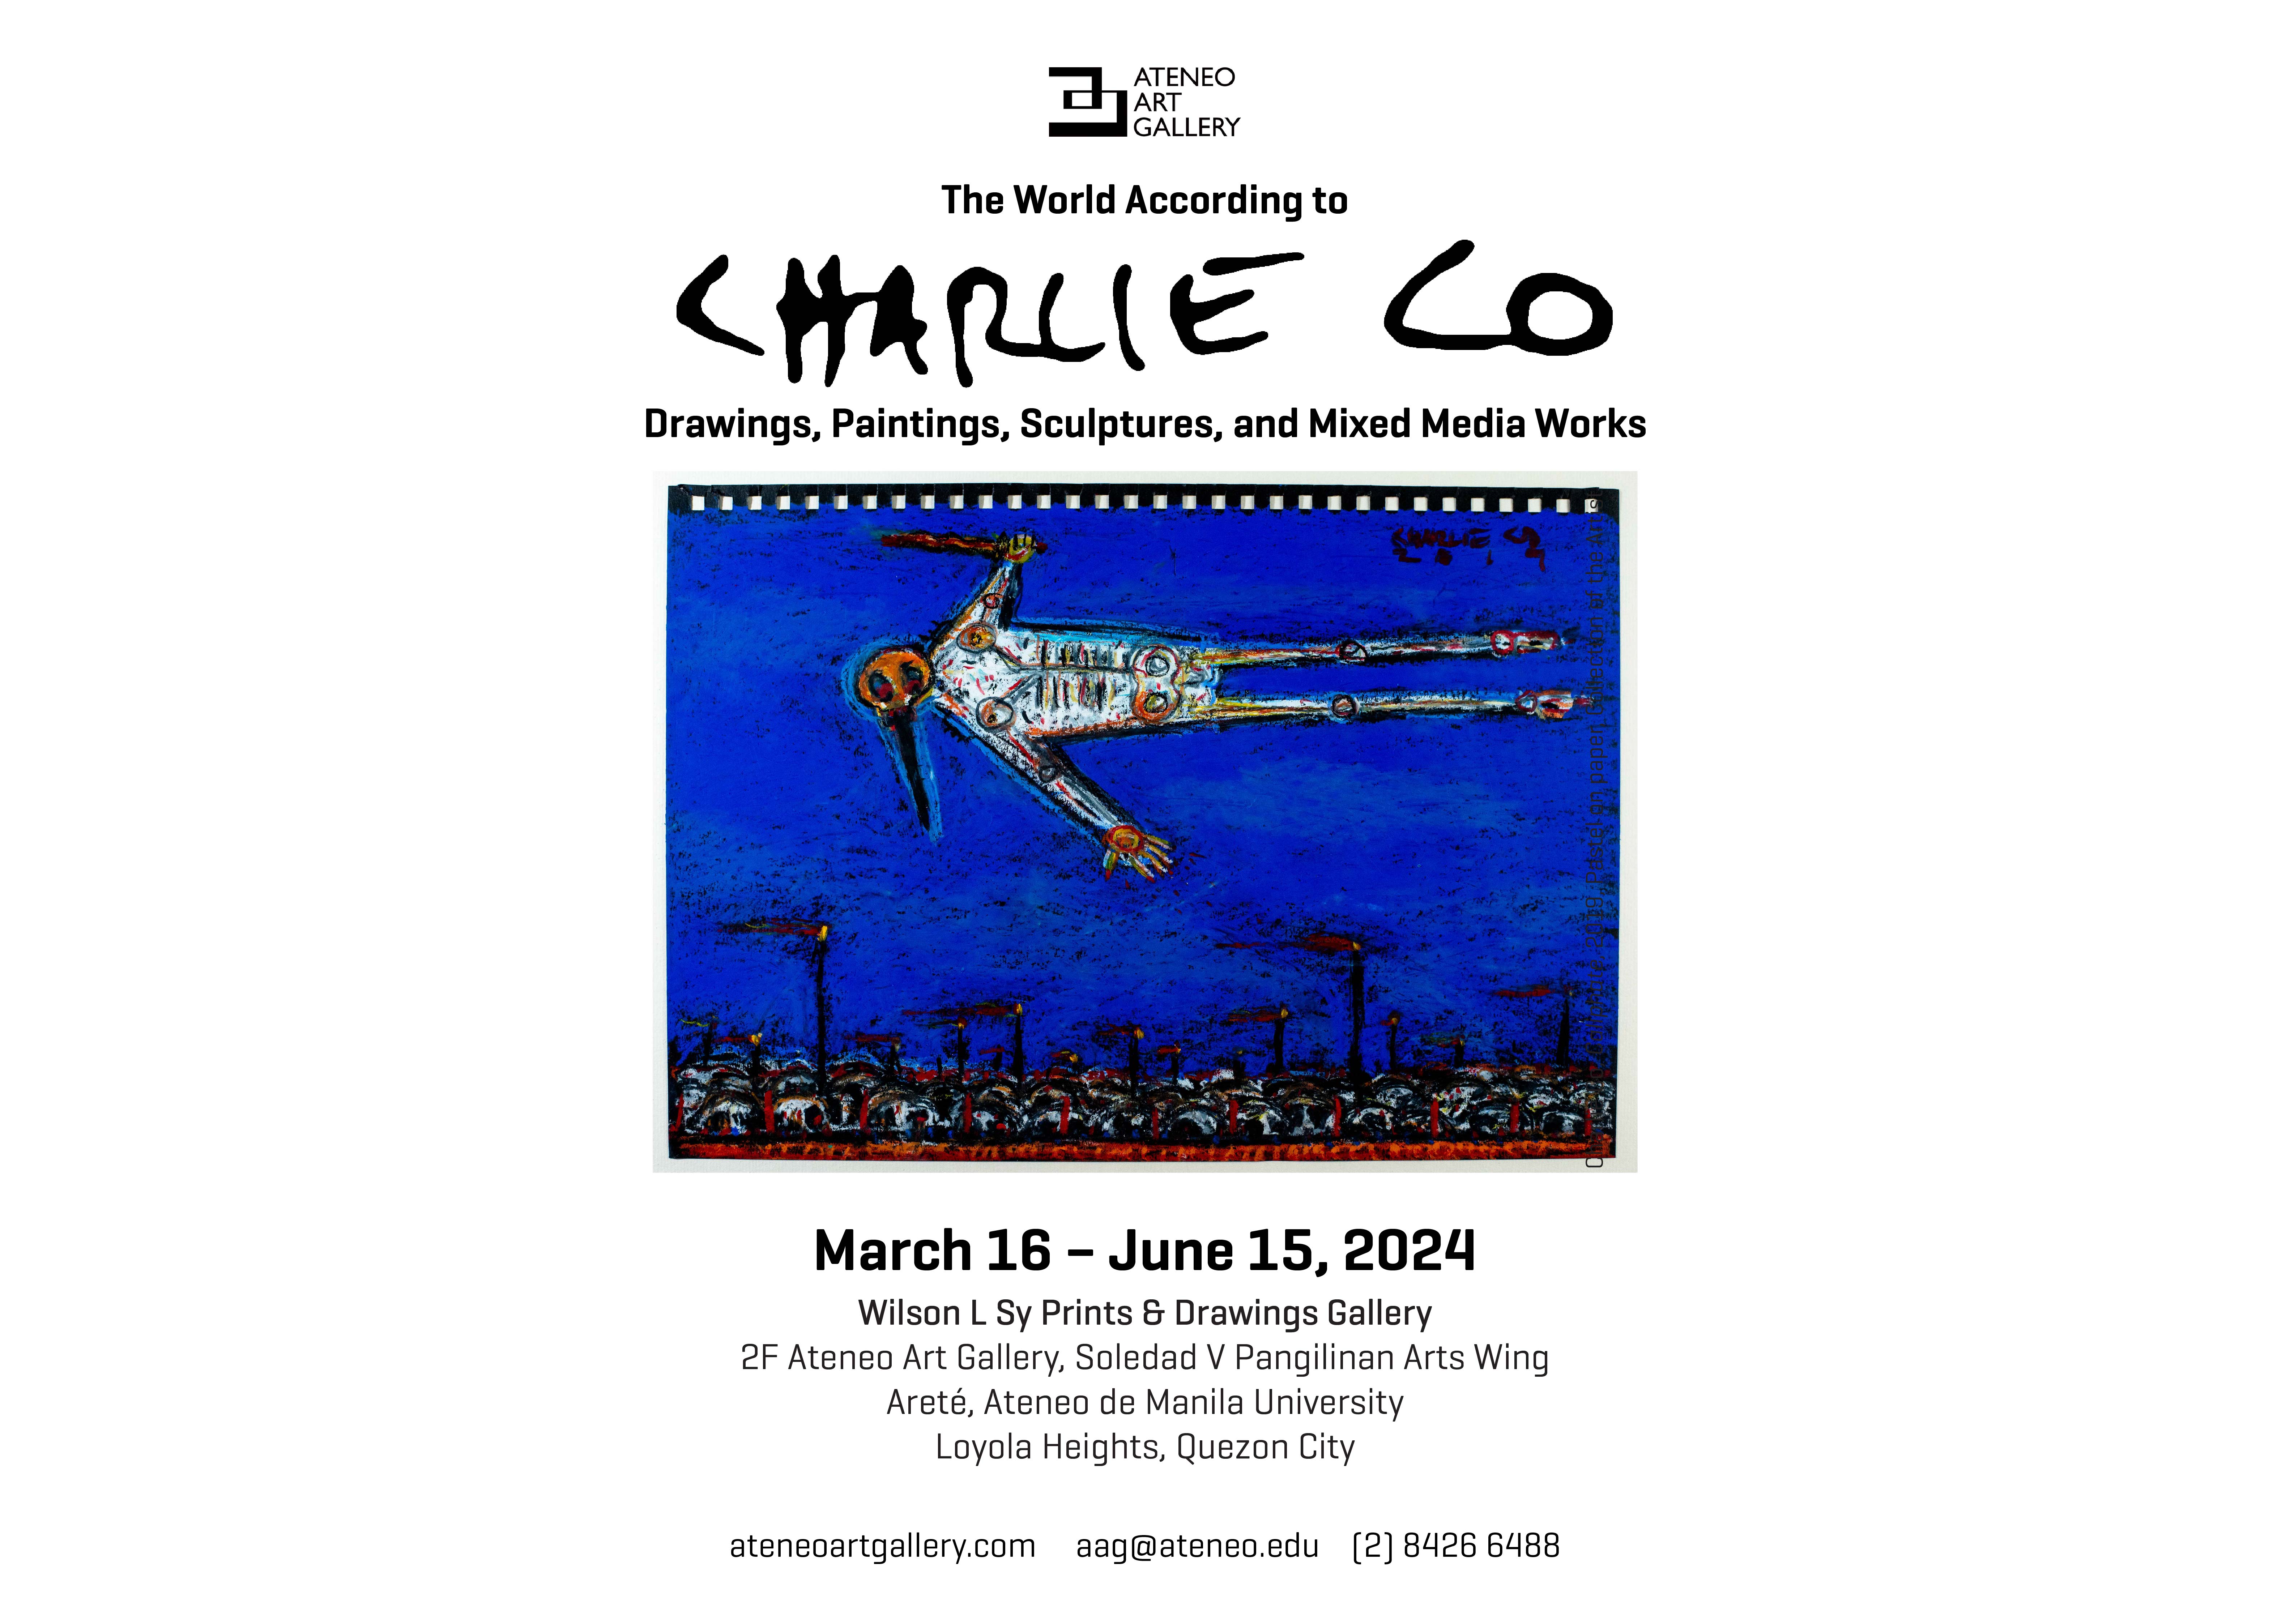 Charlie Co 2024